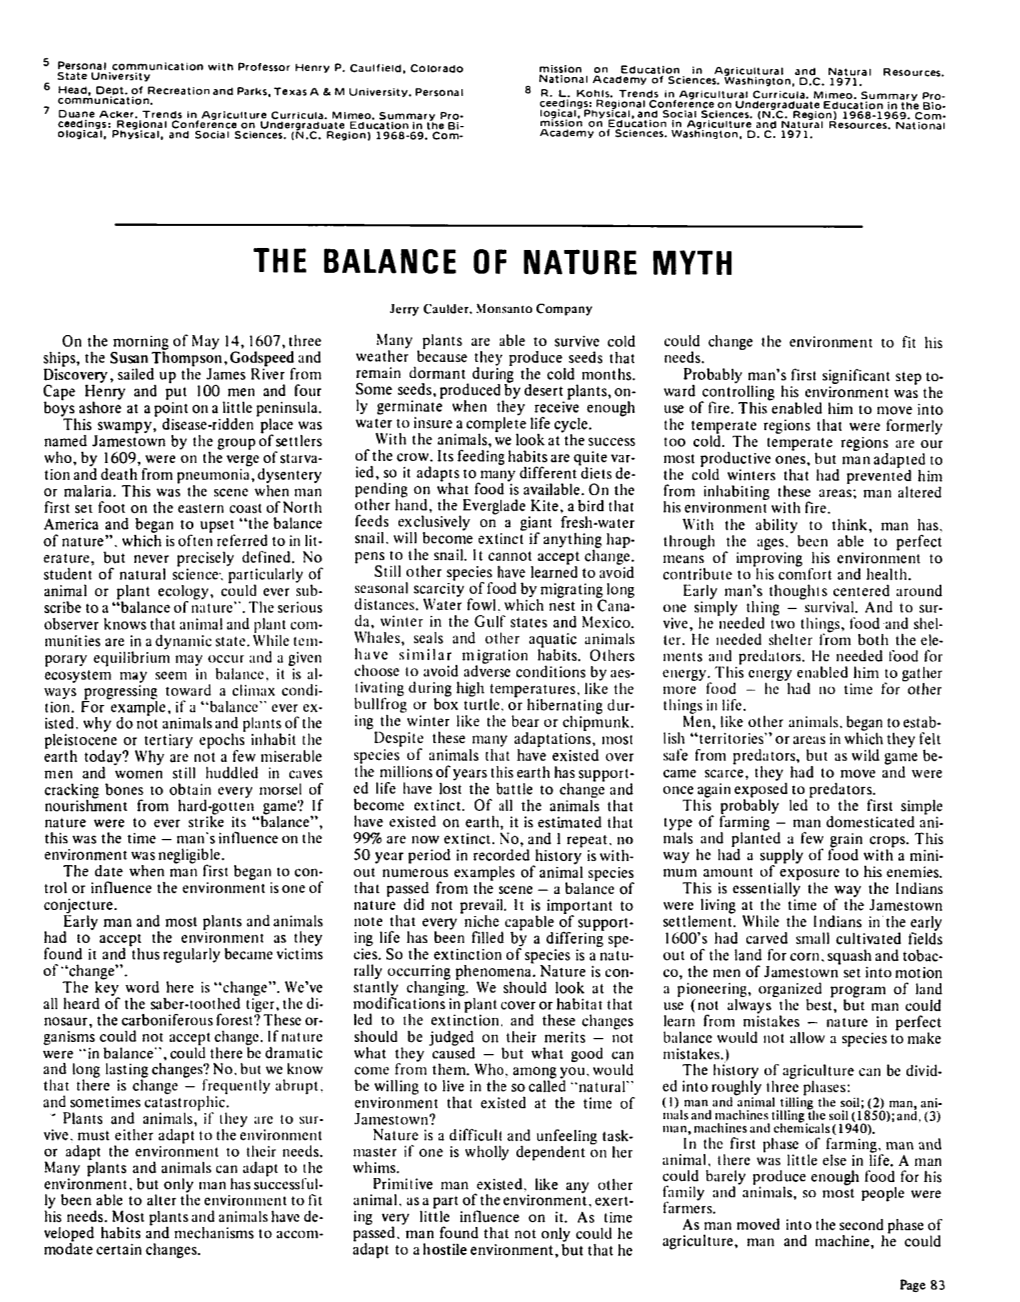 The Balance of Nature Myth